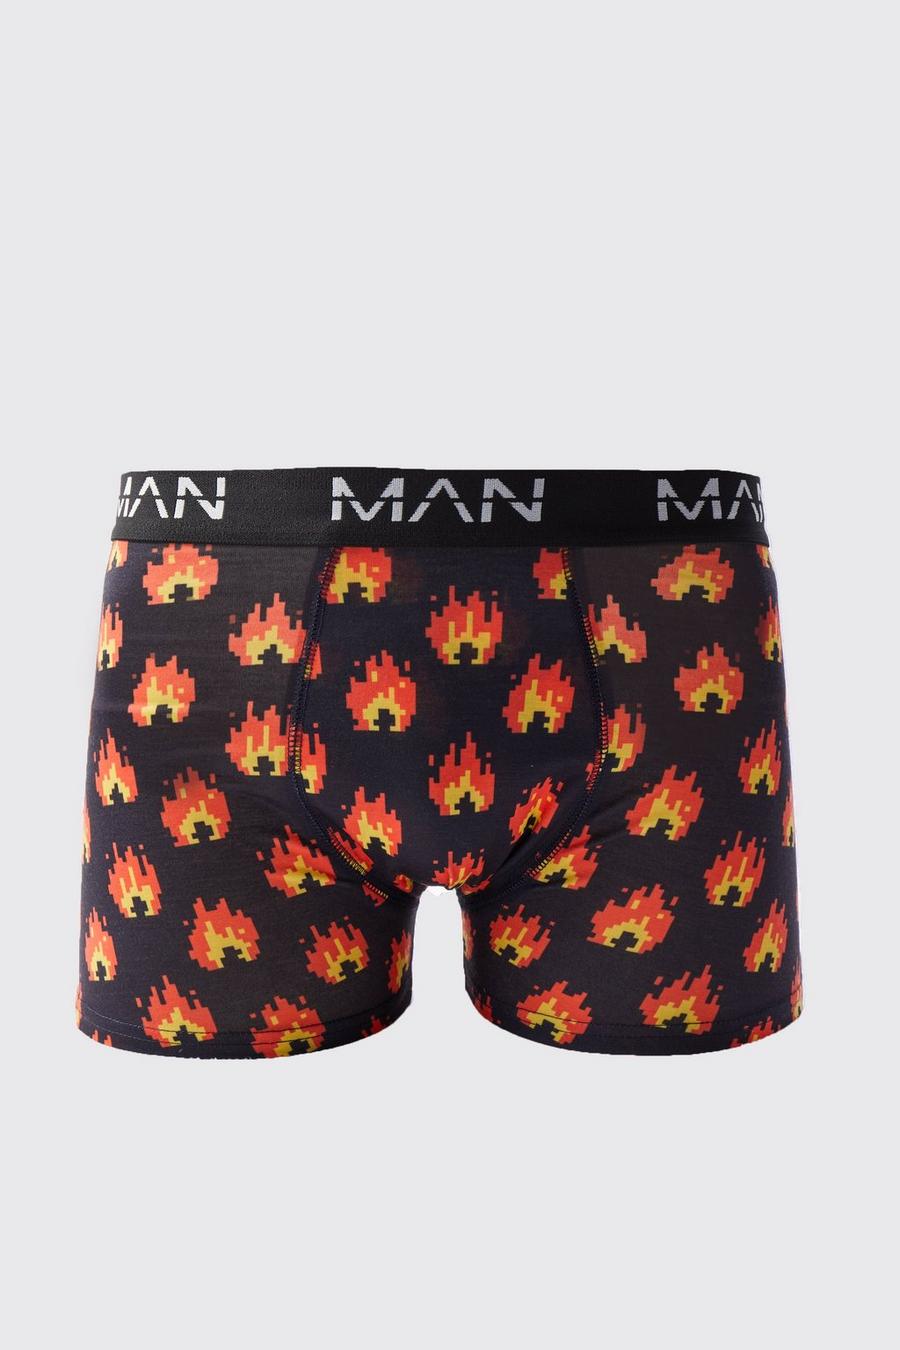 Boxershorts mit Pixel Flammen-Print, Black